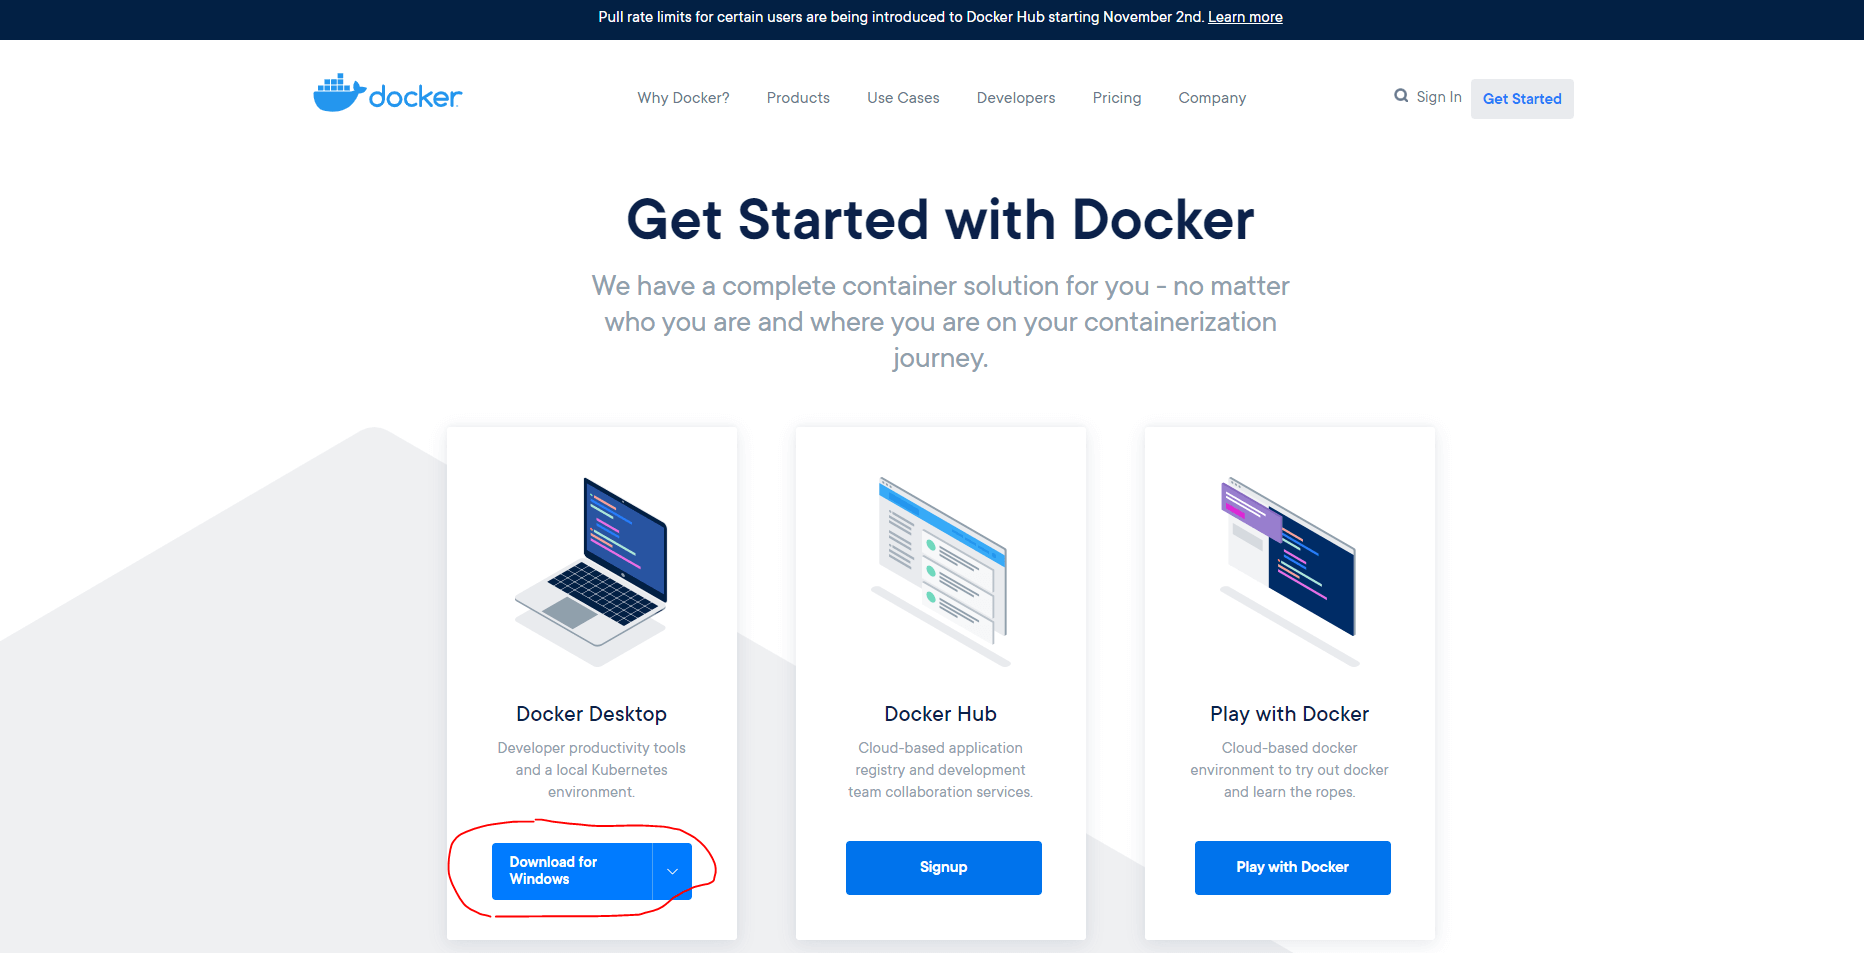 Docker's Get Started Page